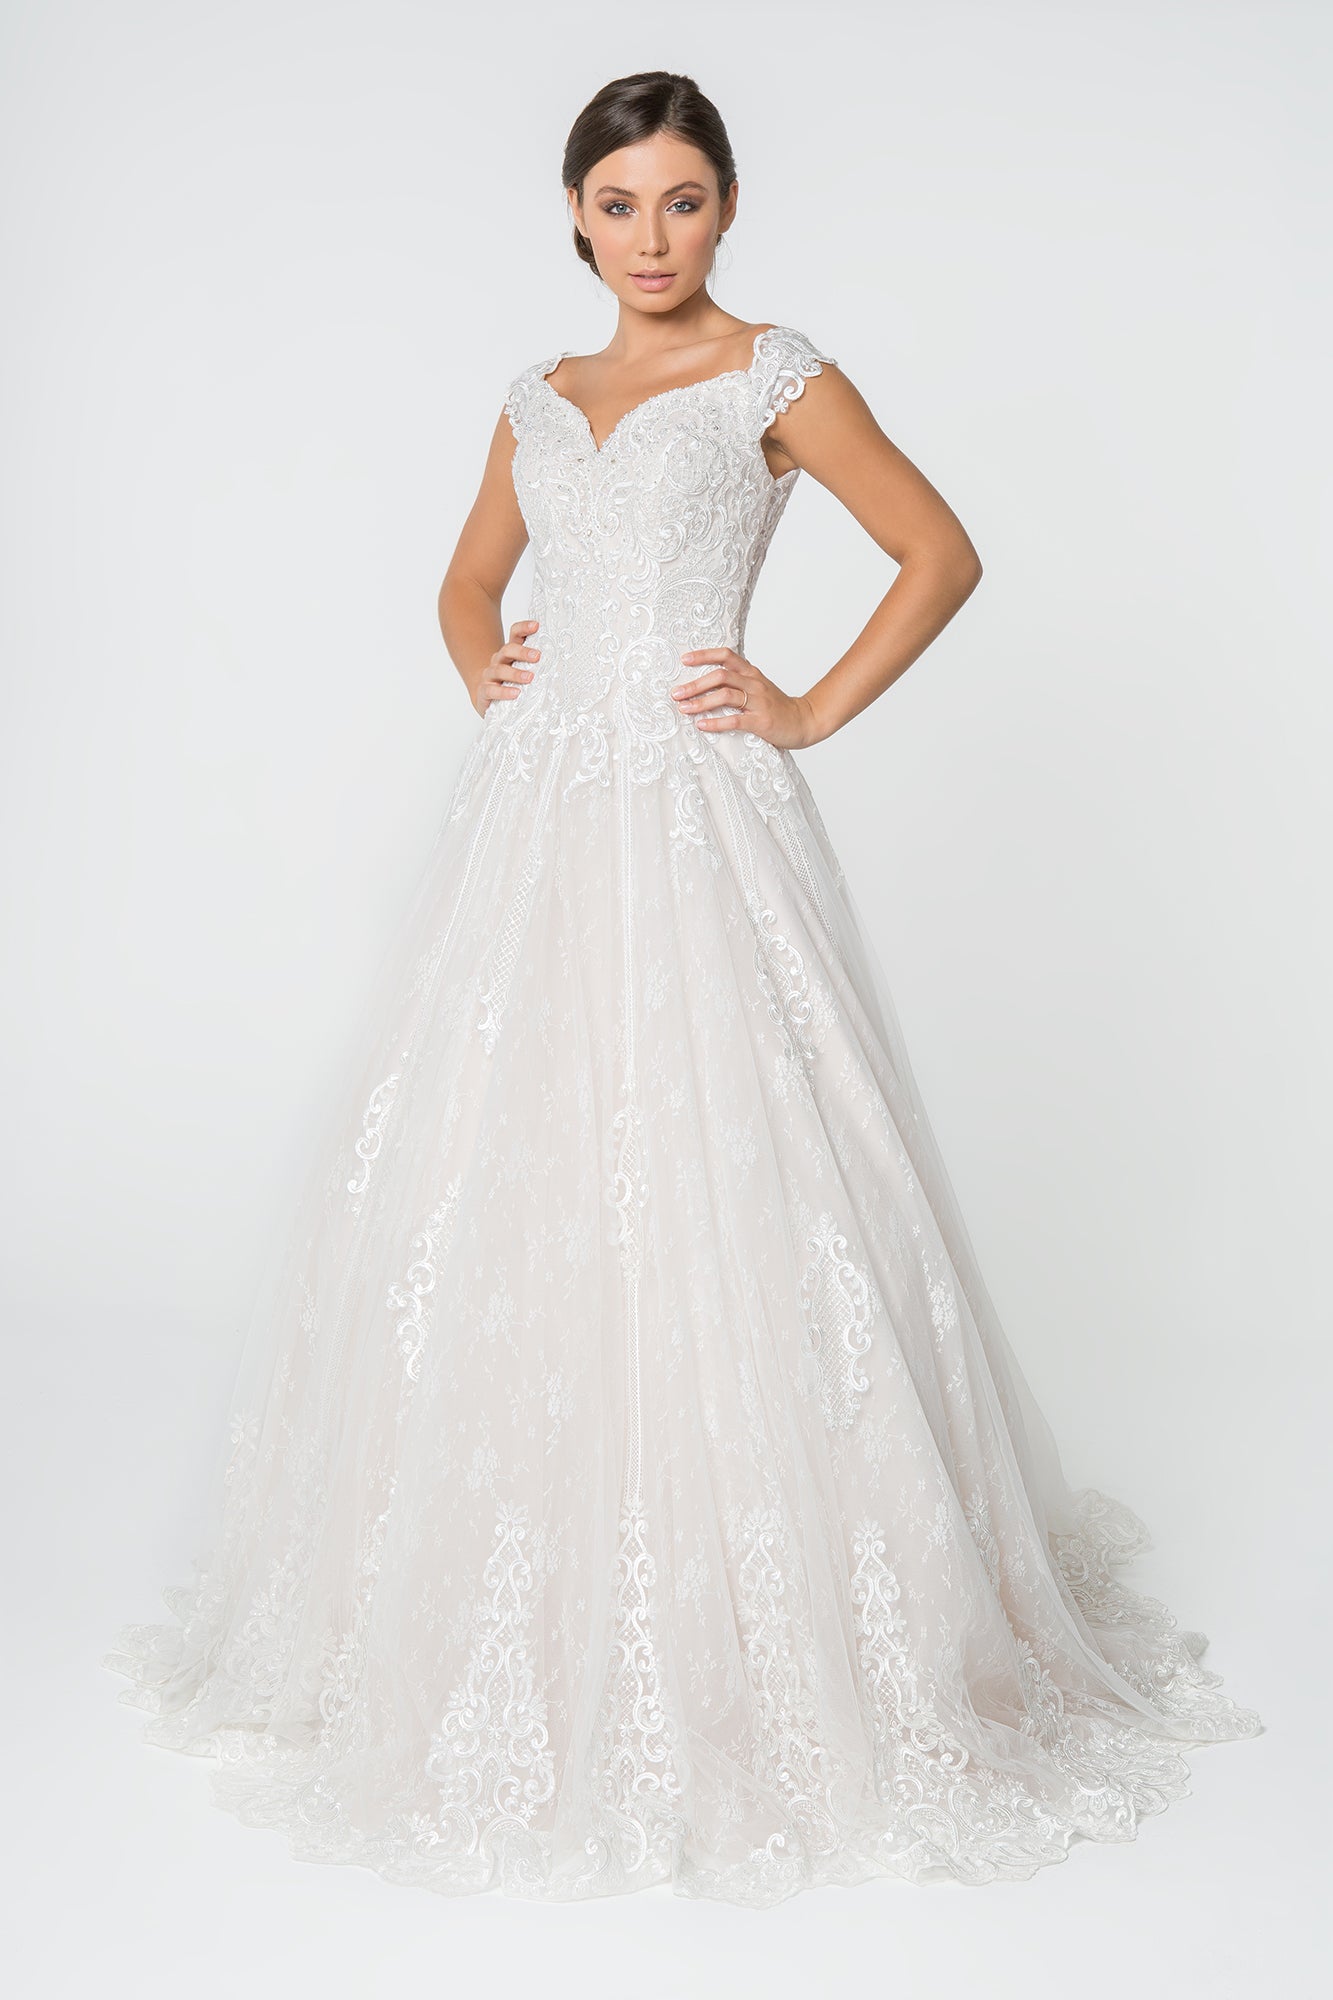 Lace Embellished Bodice A-Line Wedding Gown GLGL2823-WEDDING GOWNS-smcfashion.com